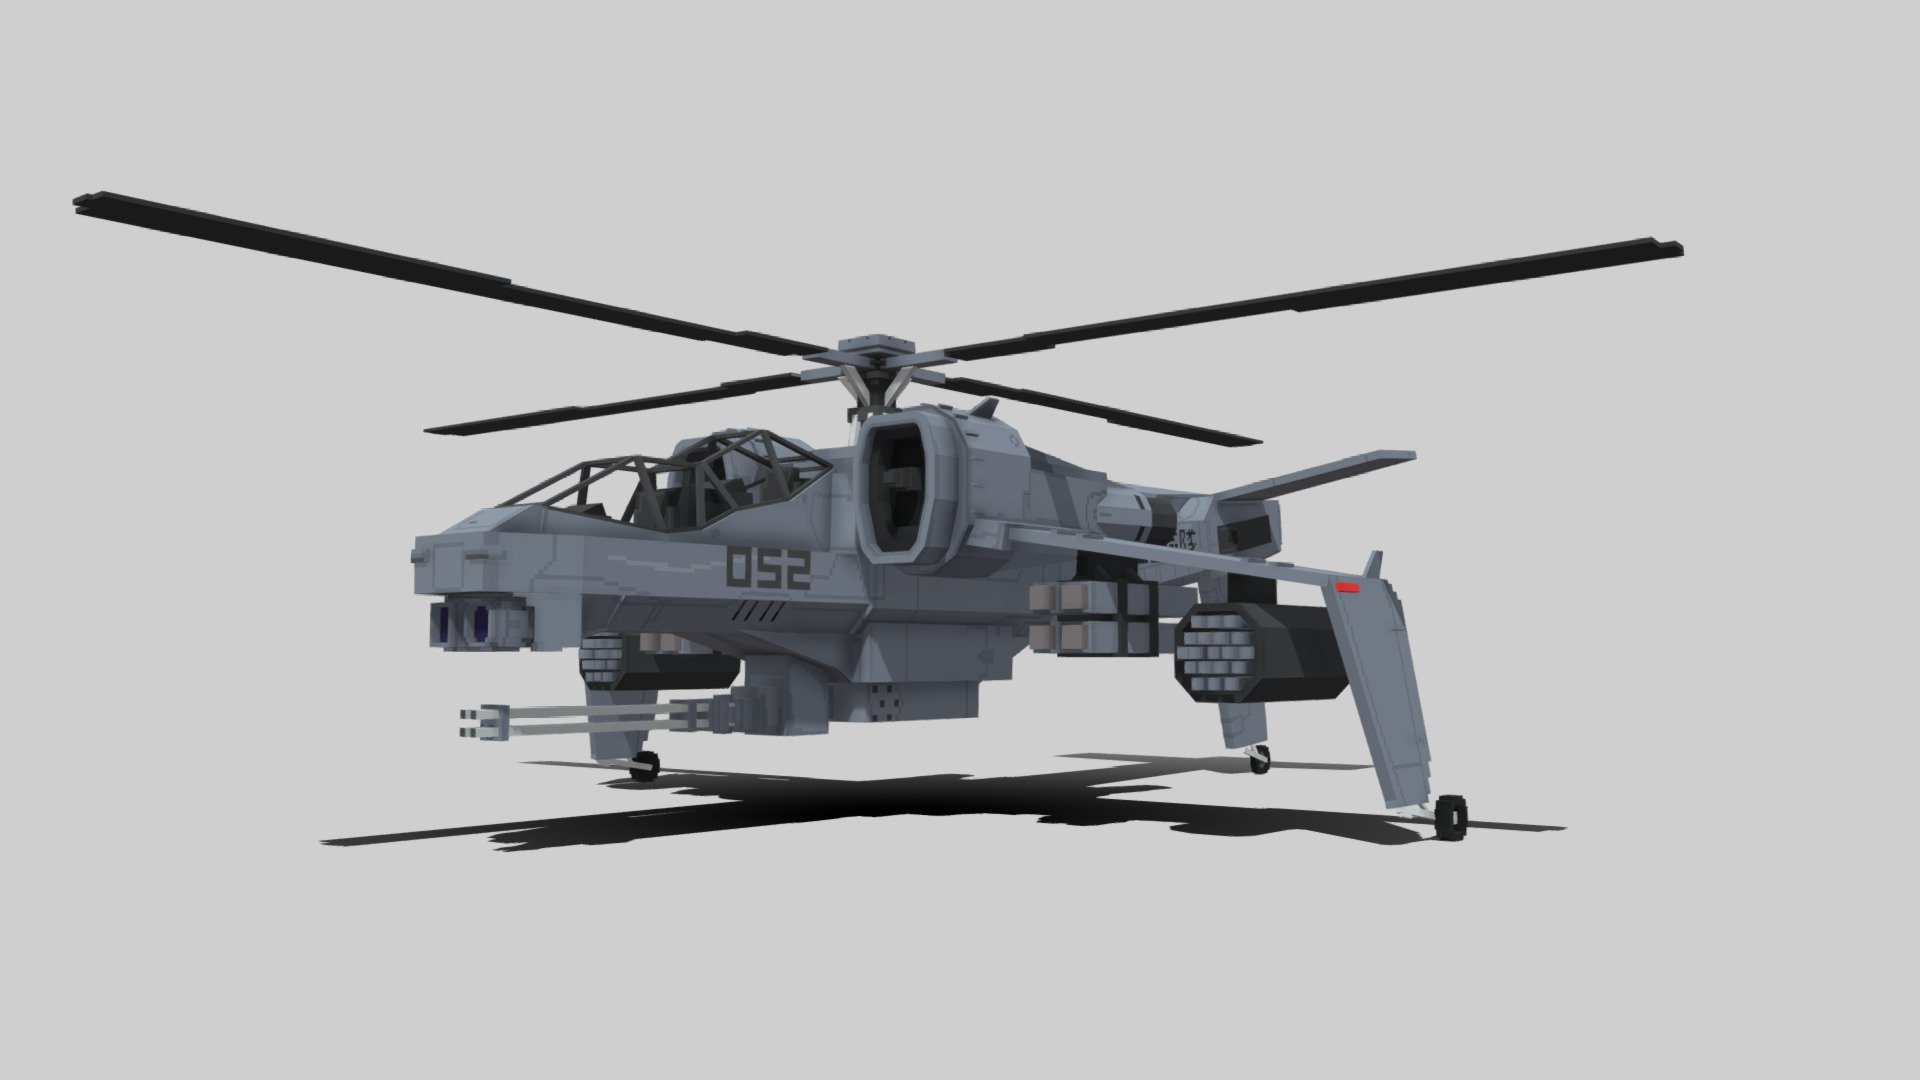 052 Hellhound Jdsf Helicoper Patlabor Movie 2 3d Model By Bertus Bertus 4d5855d 